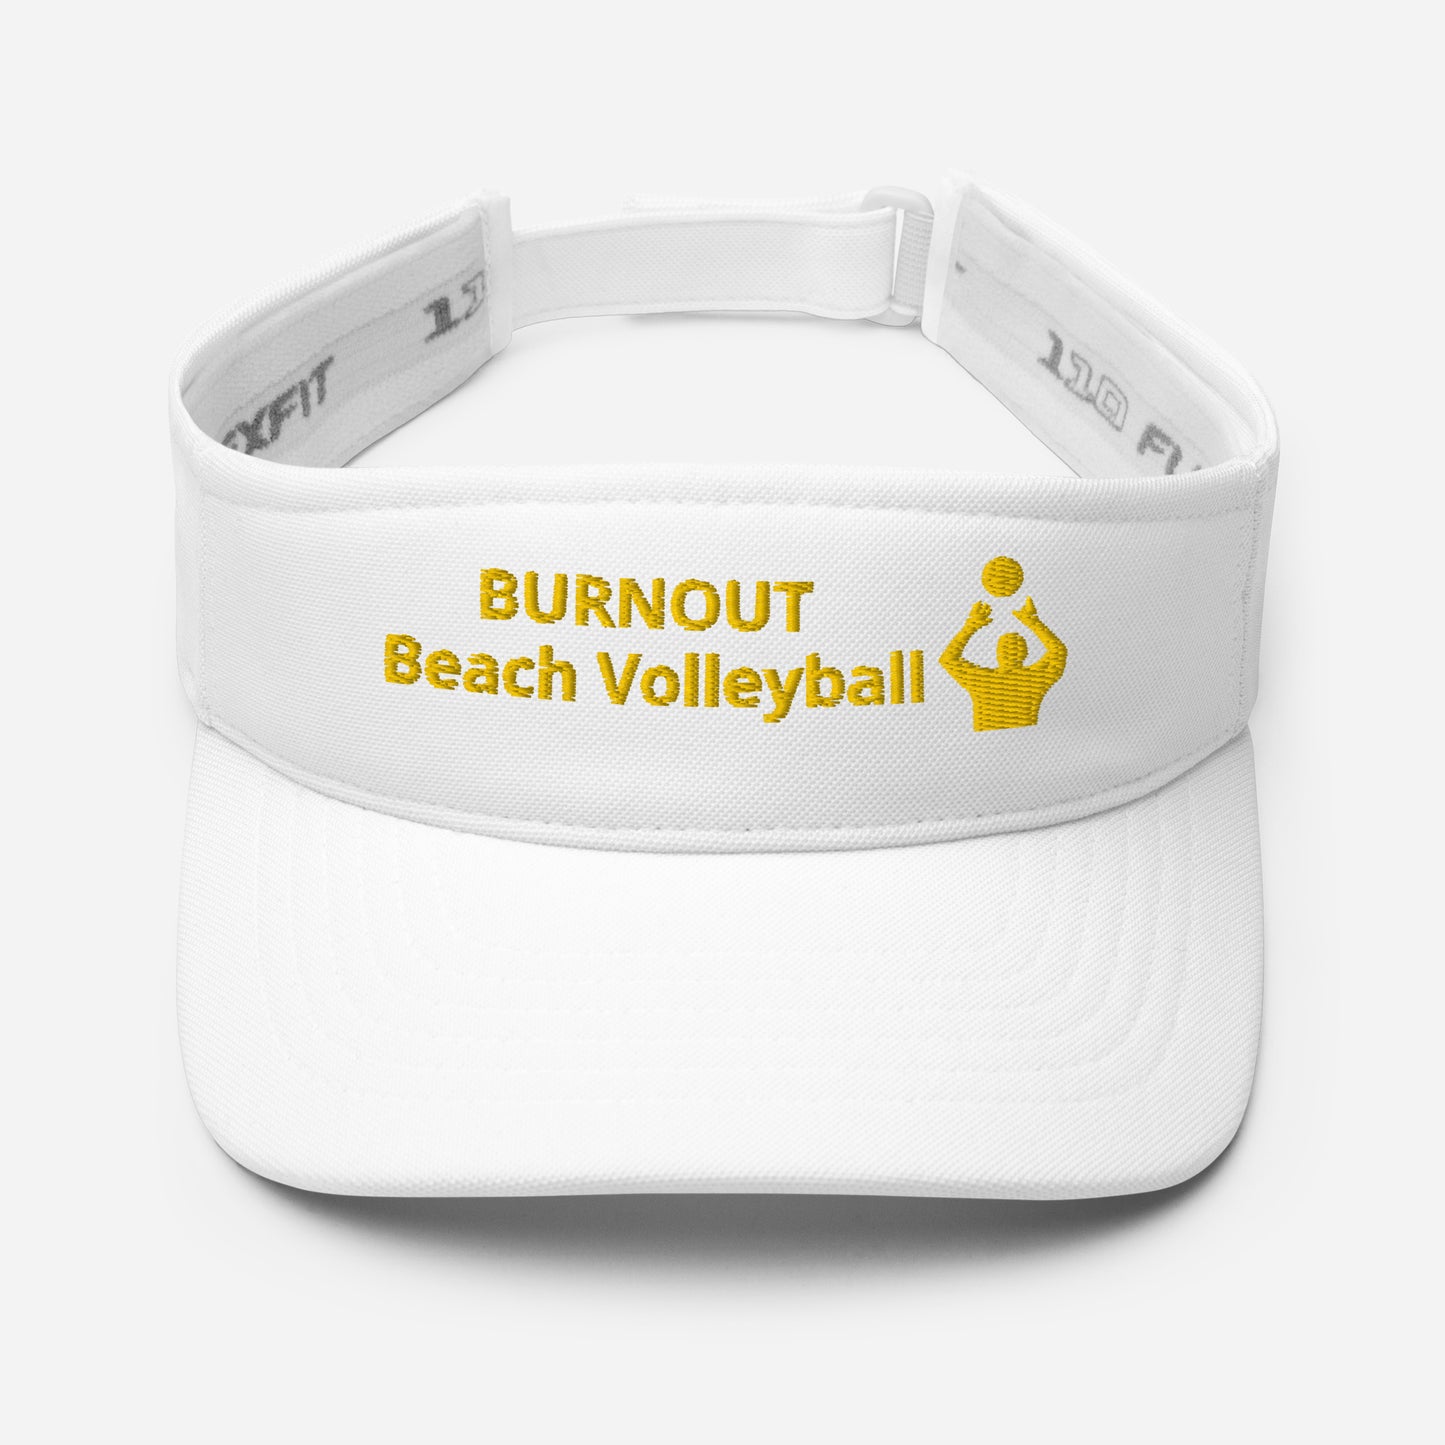 BURNOUT Beach Volleyball - Redondo Beach - Visor